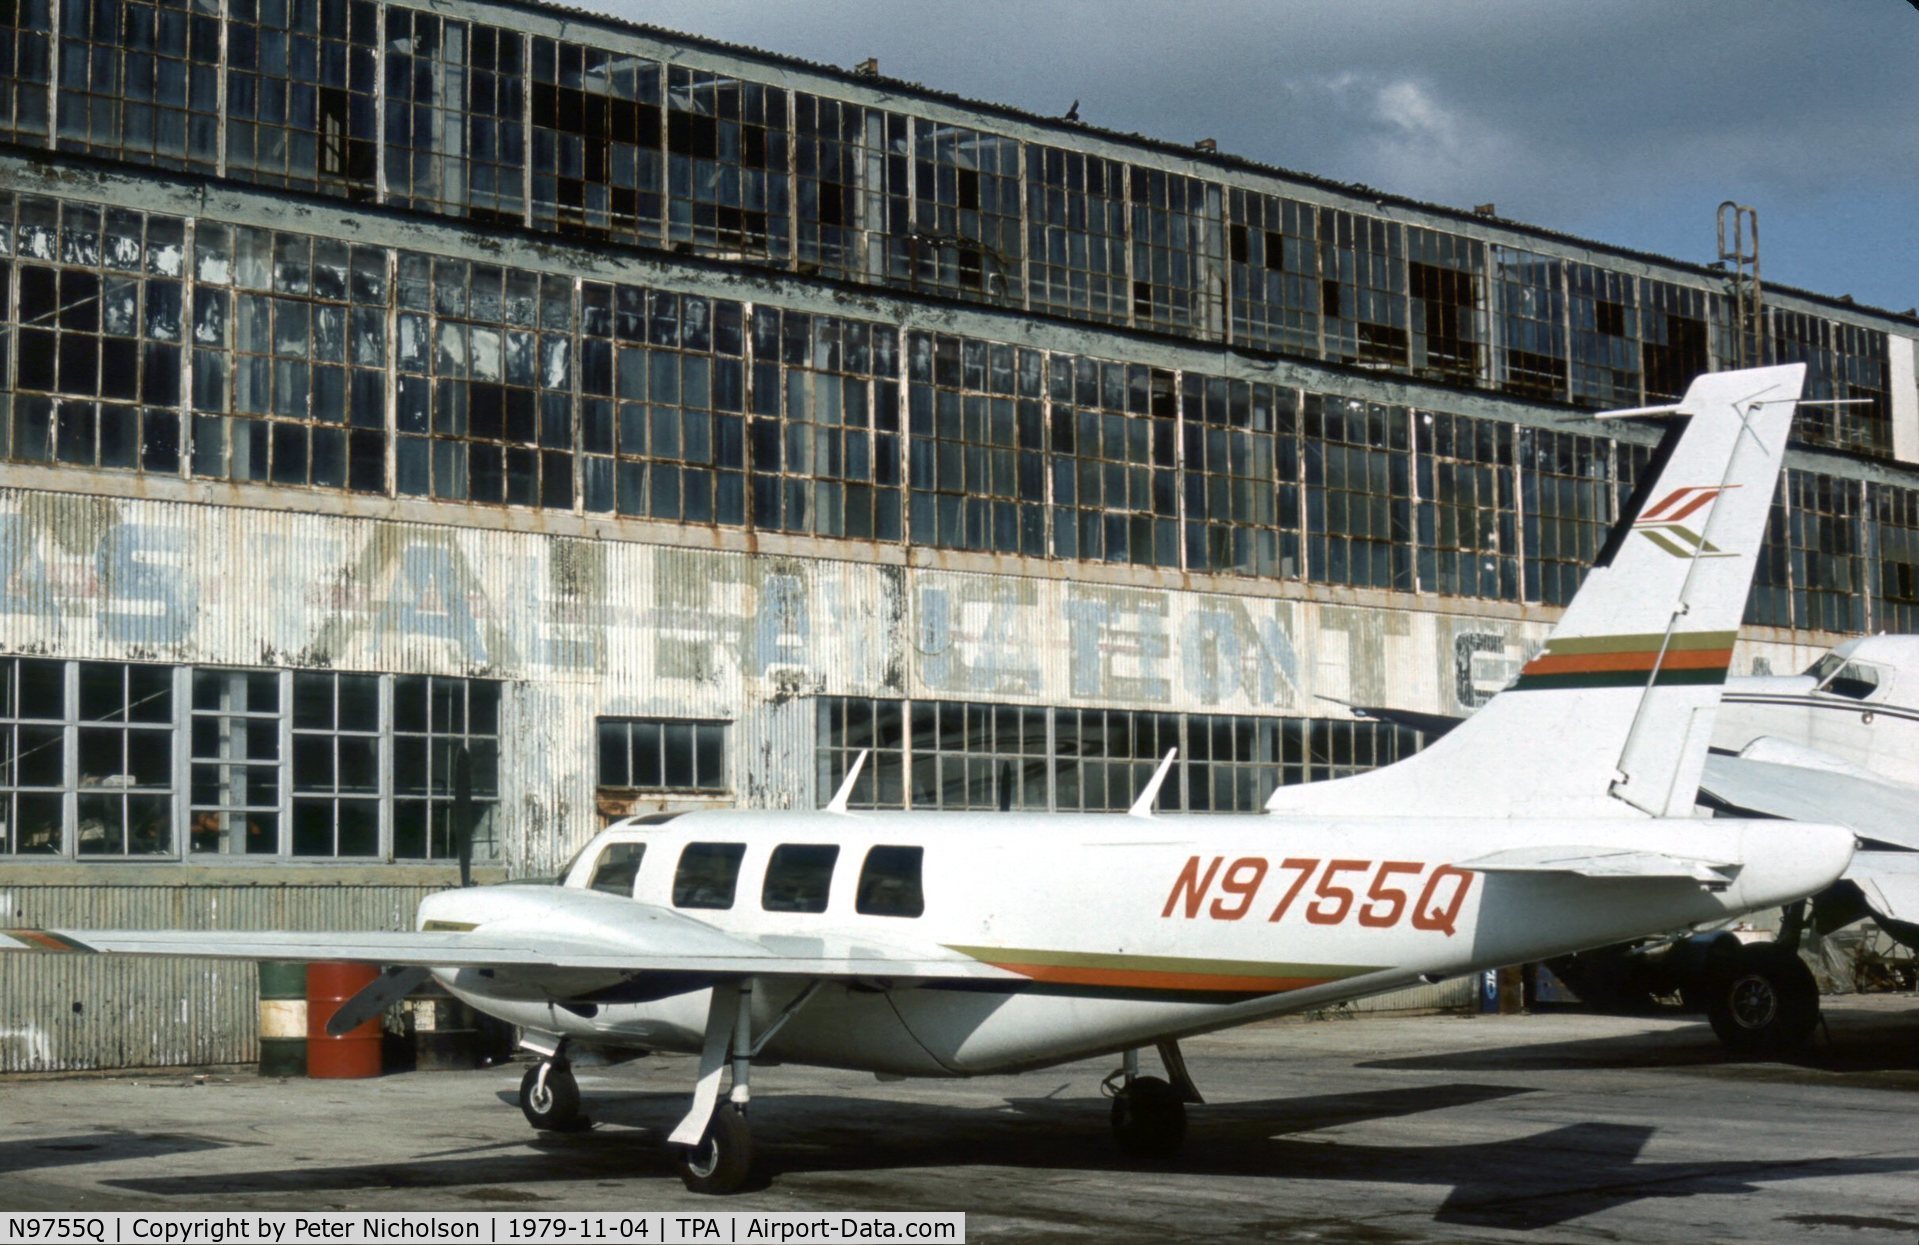 N9755Q, 1977 Smith Aerostar 601P C/N 61P-0391-132, Smith Aerostar 601P seen at Tampa in November 1979.